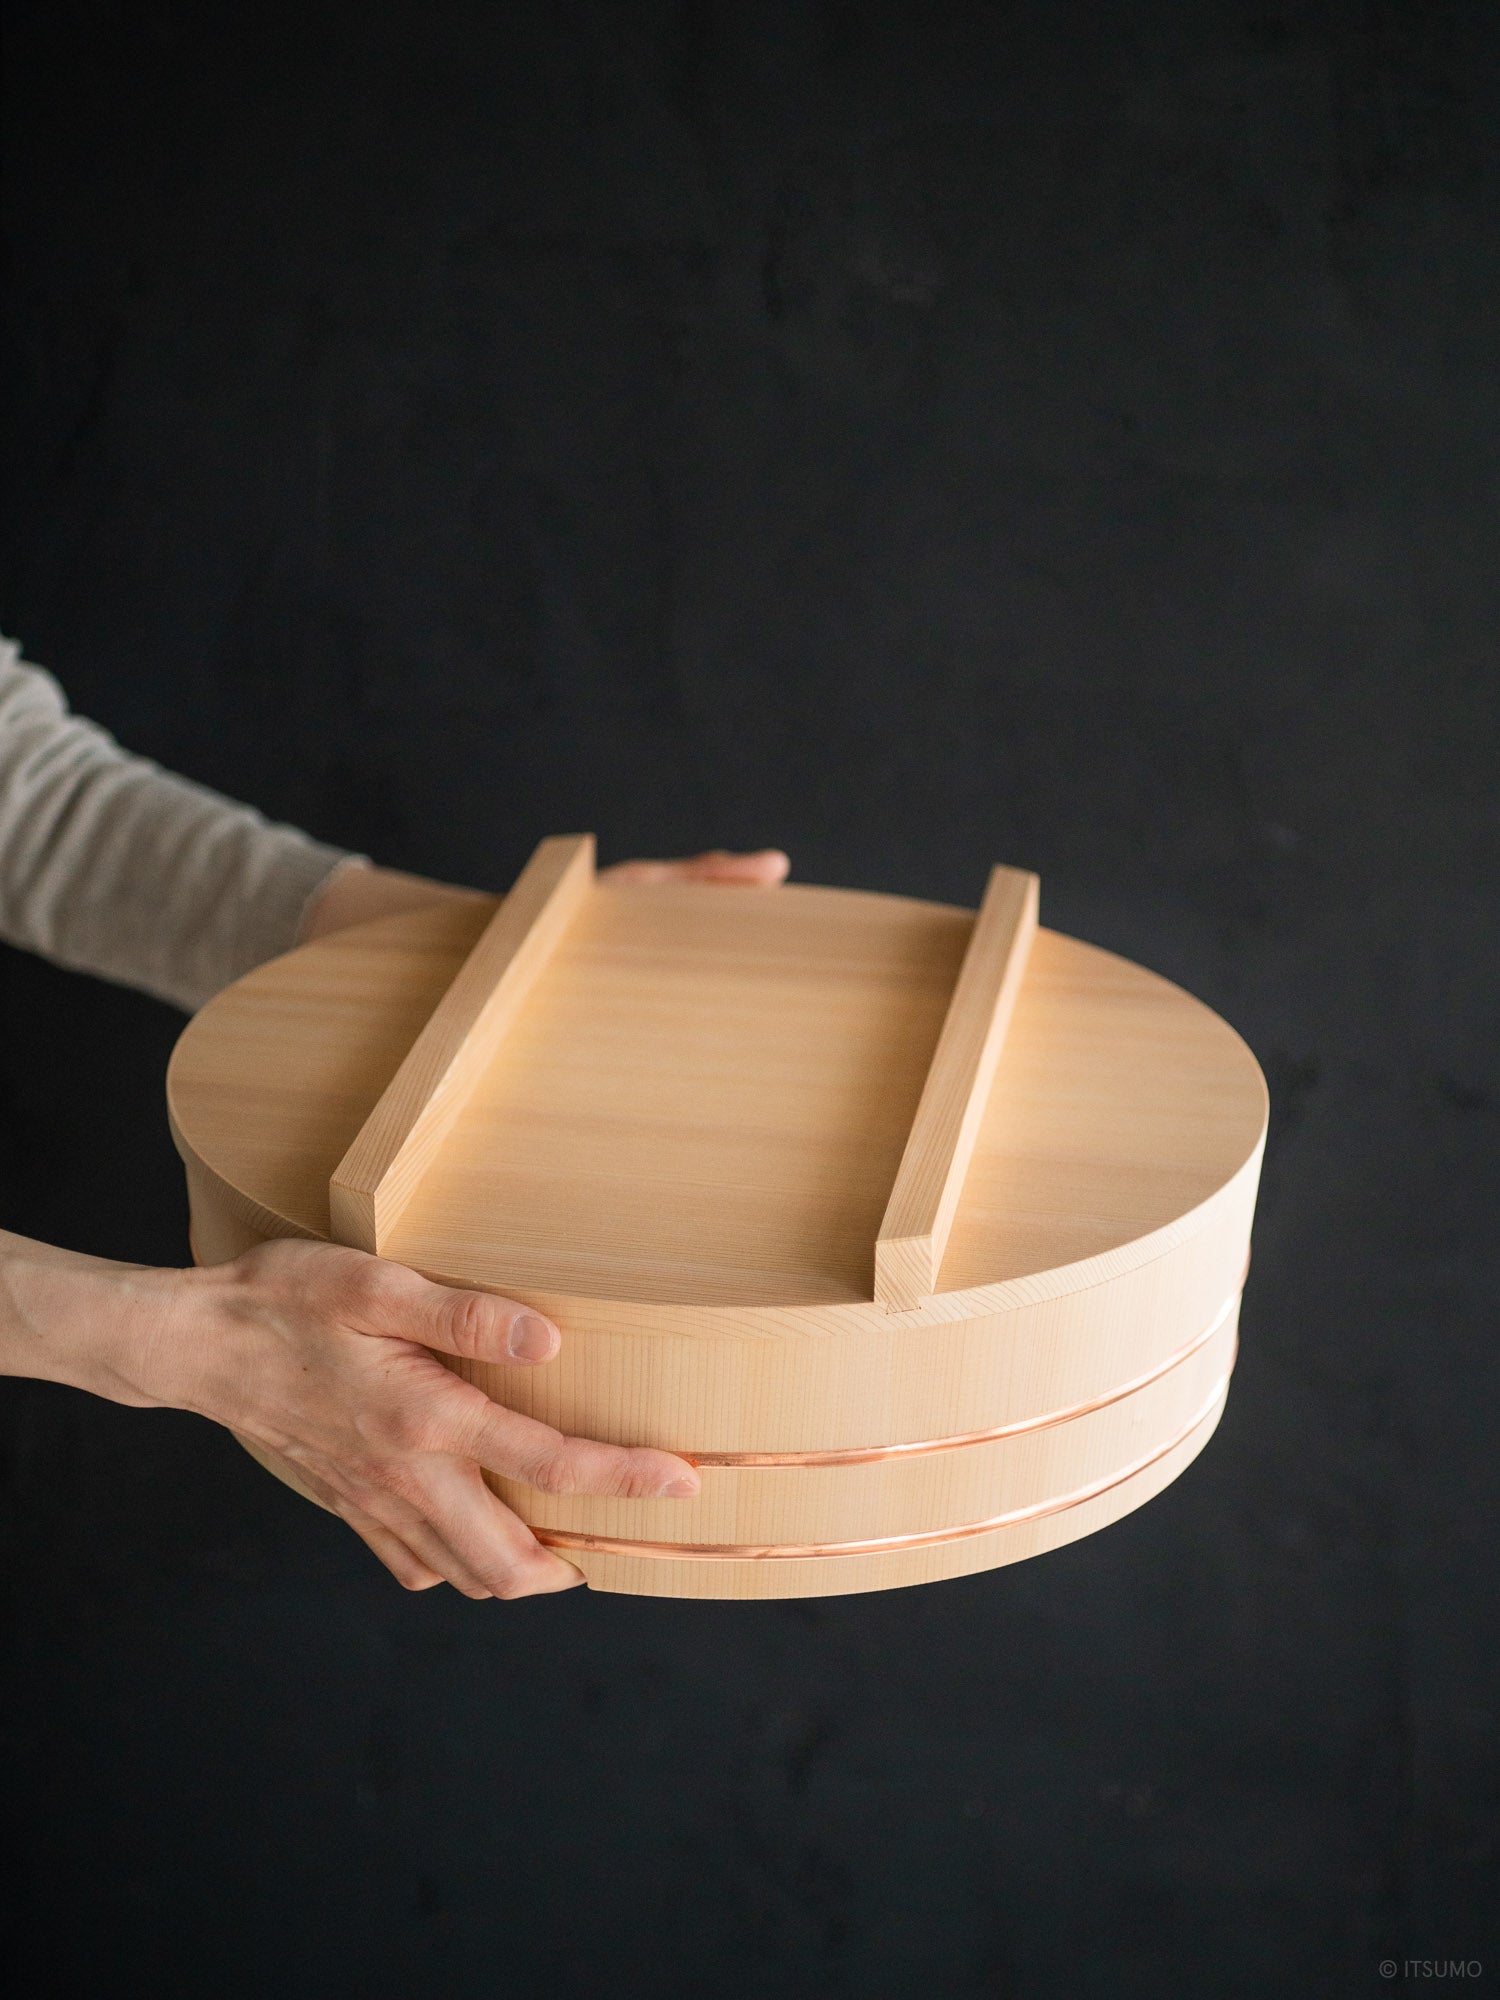 Hands holding a large Azmaya kiso sawara sushi rice mixing bowl